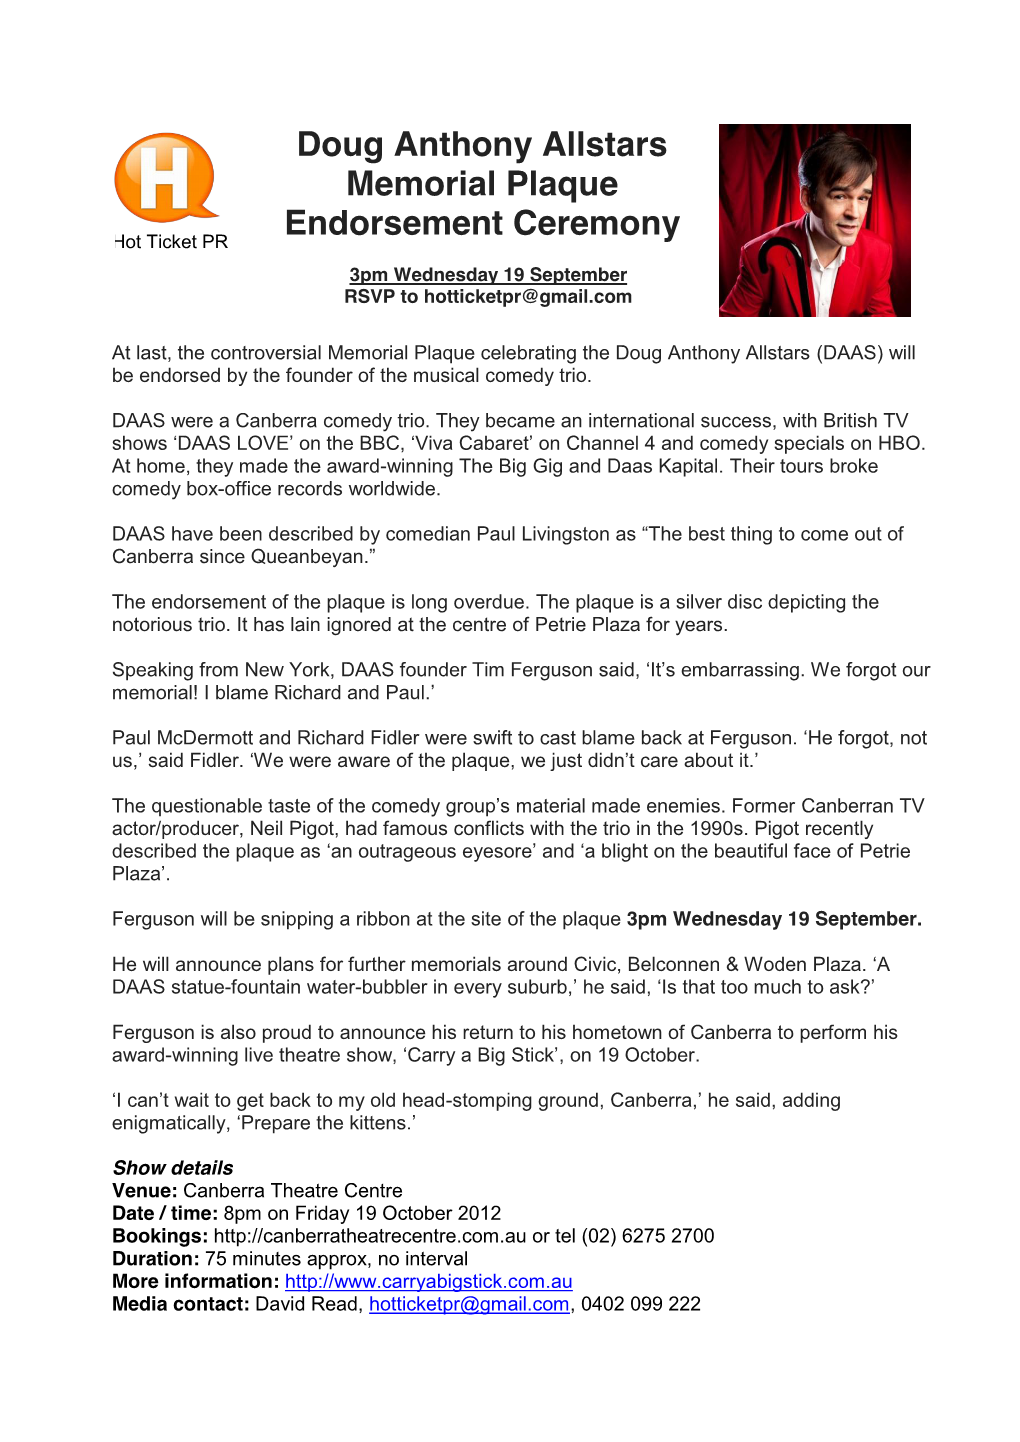 Doug Anthony Allstars Memorial Plaque Endorsement Ceremony Hot Ticket PR